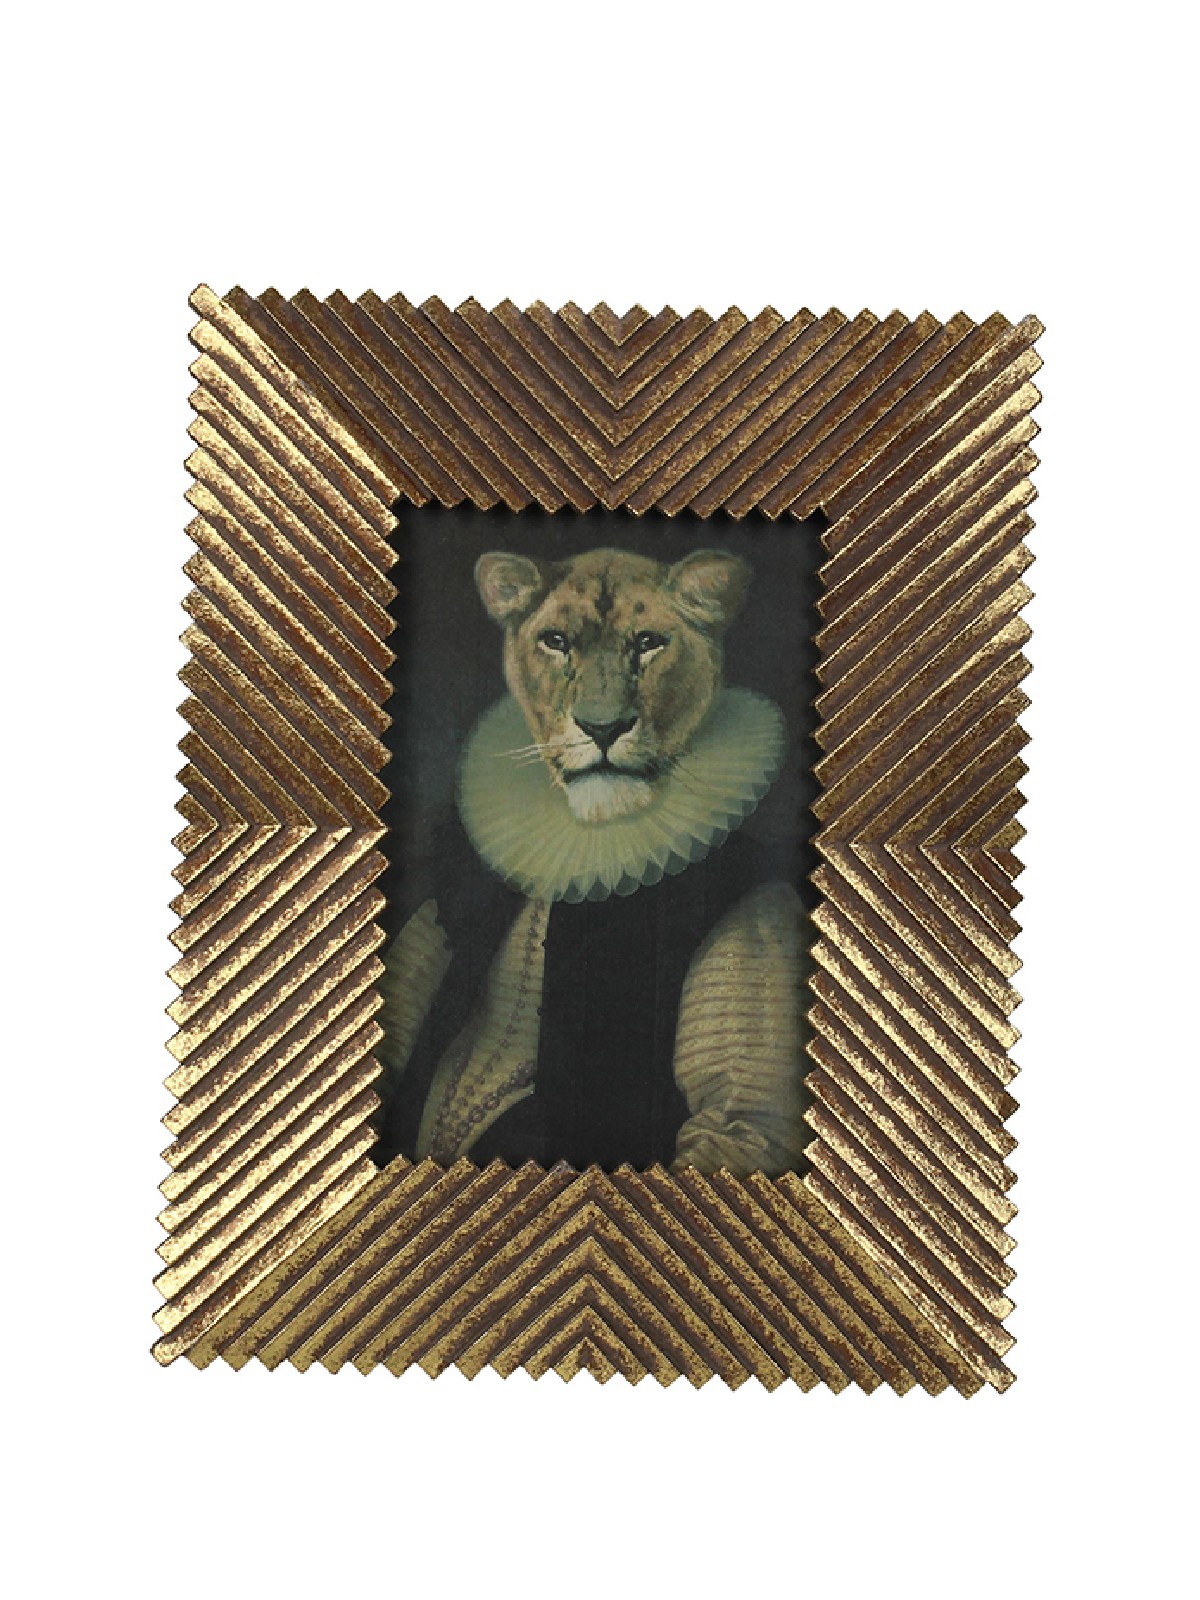 Polyresin gold photoframe “Lion” 10x15cm.